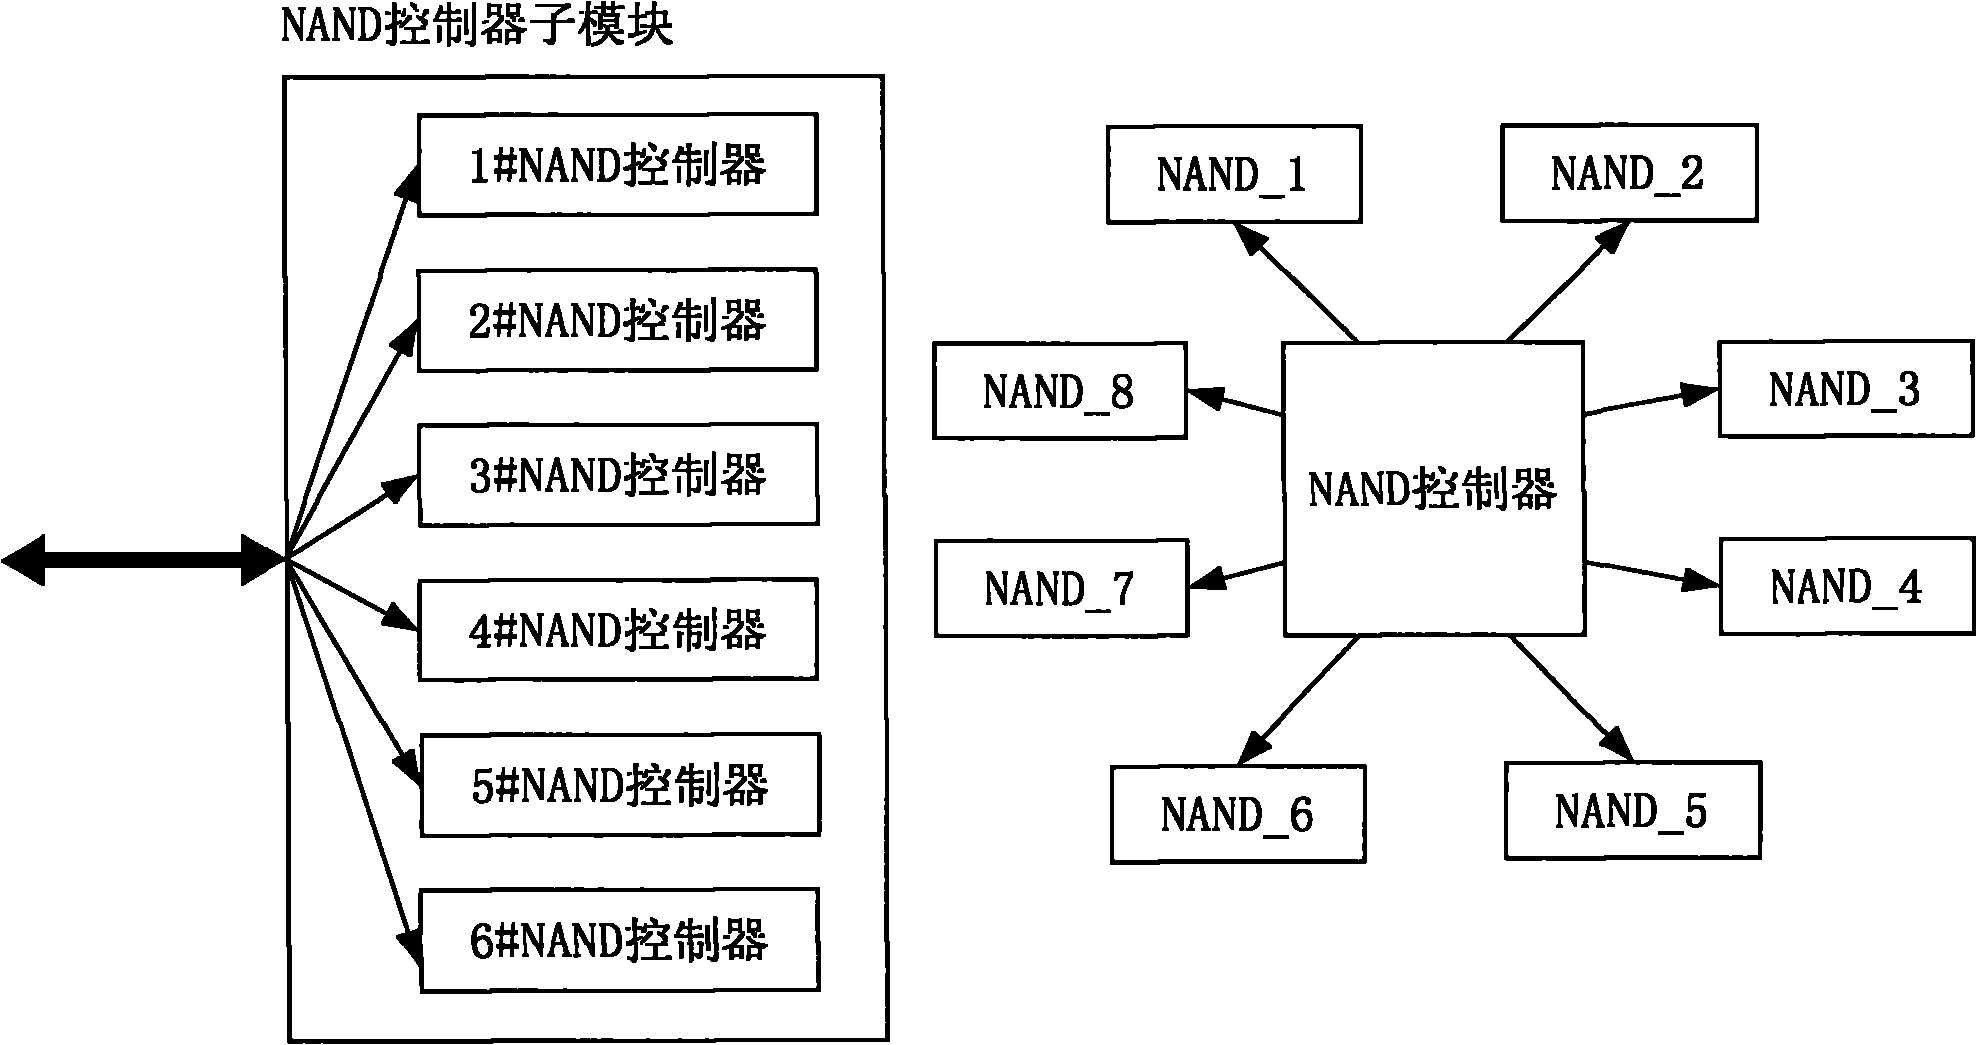 NAND-based memory plate